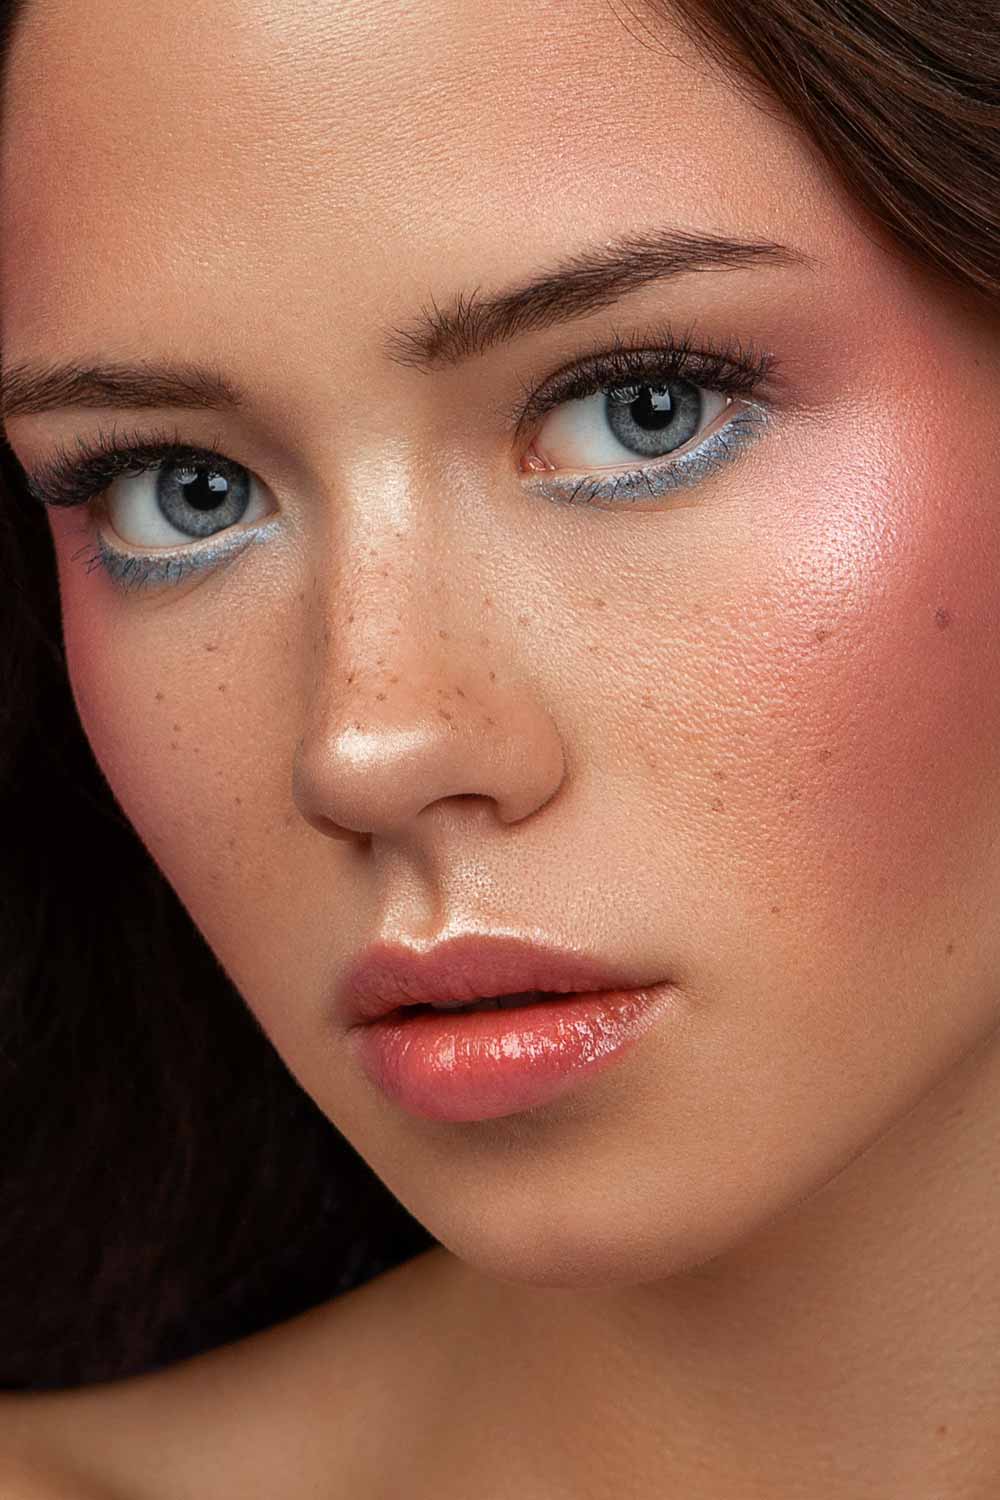 Blue Underline Makeup for Valentine's Day